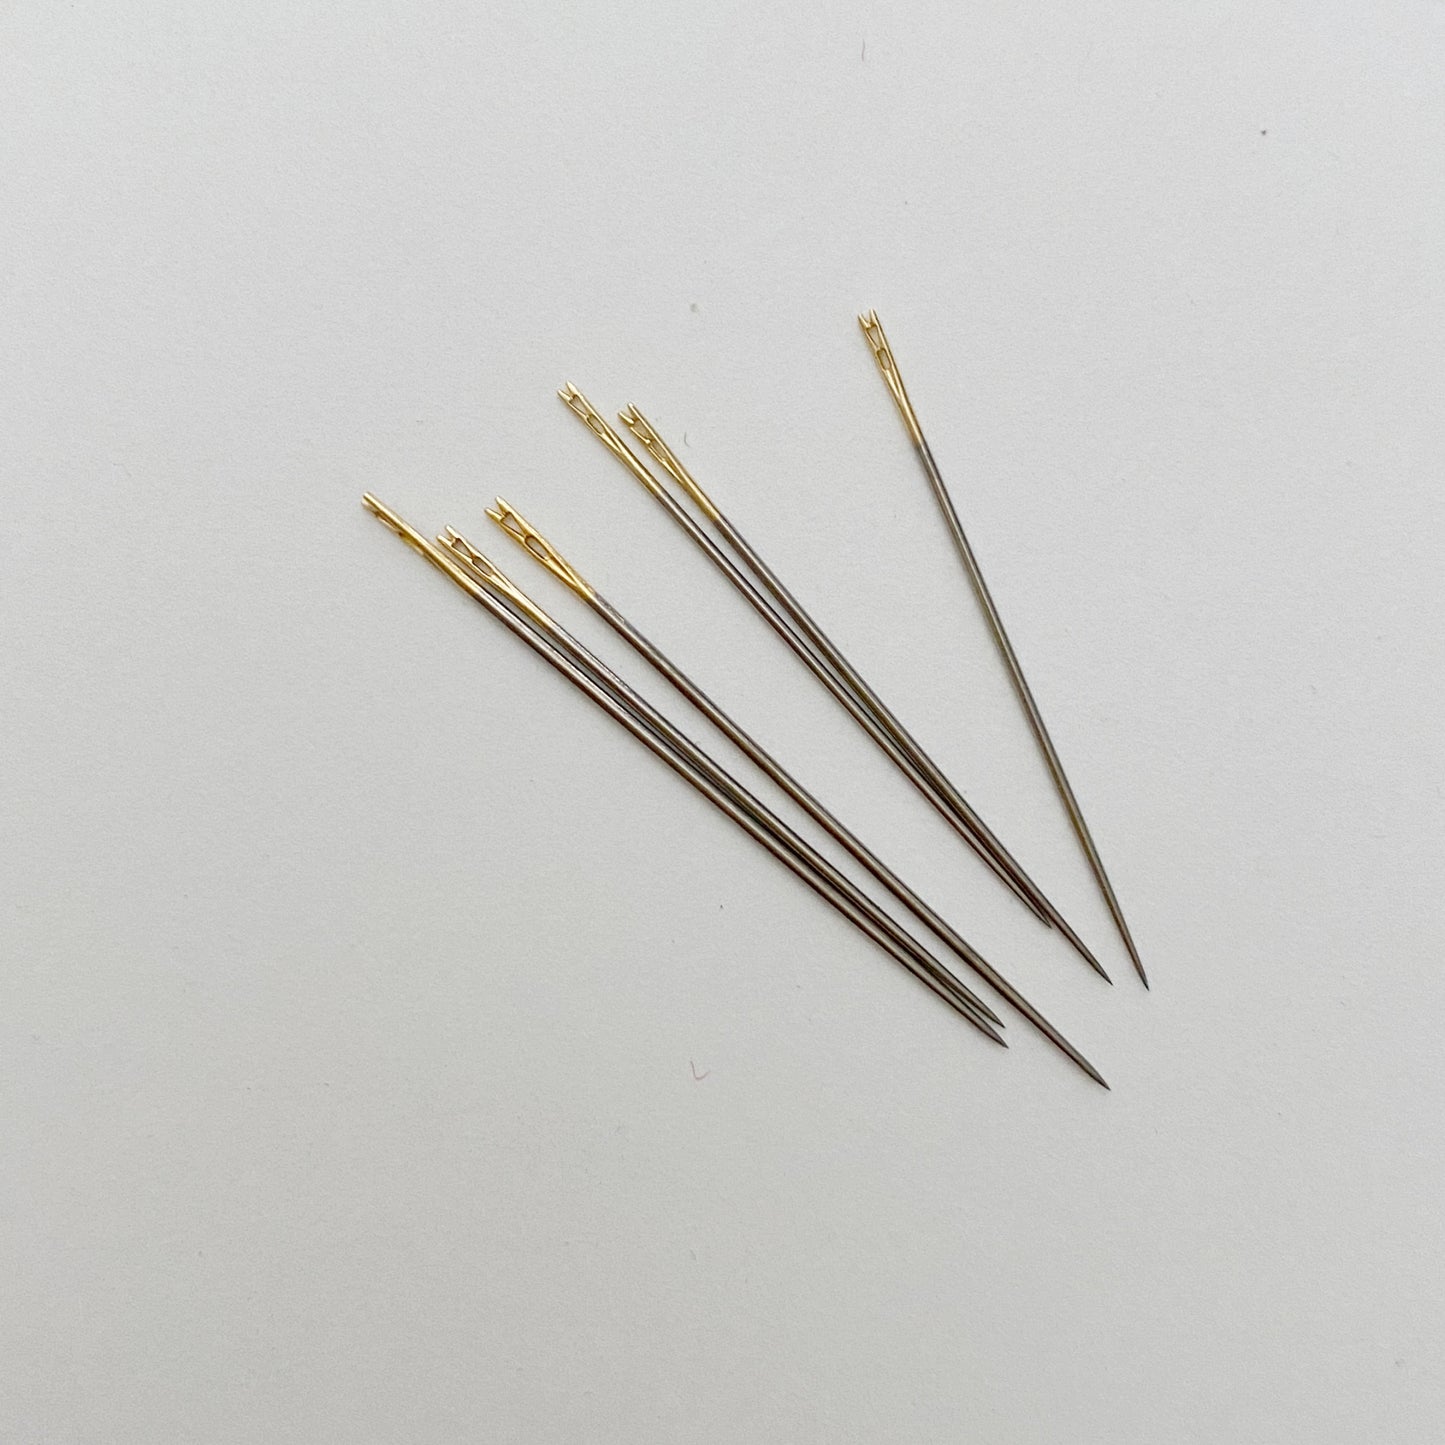 Tulip : sewing pins / needles